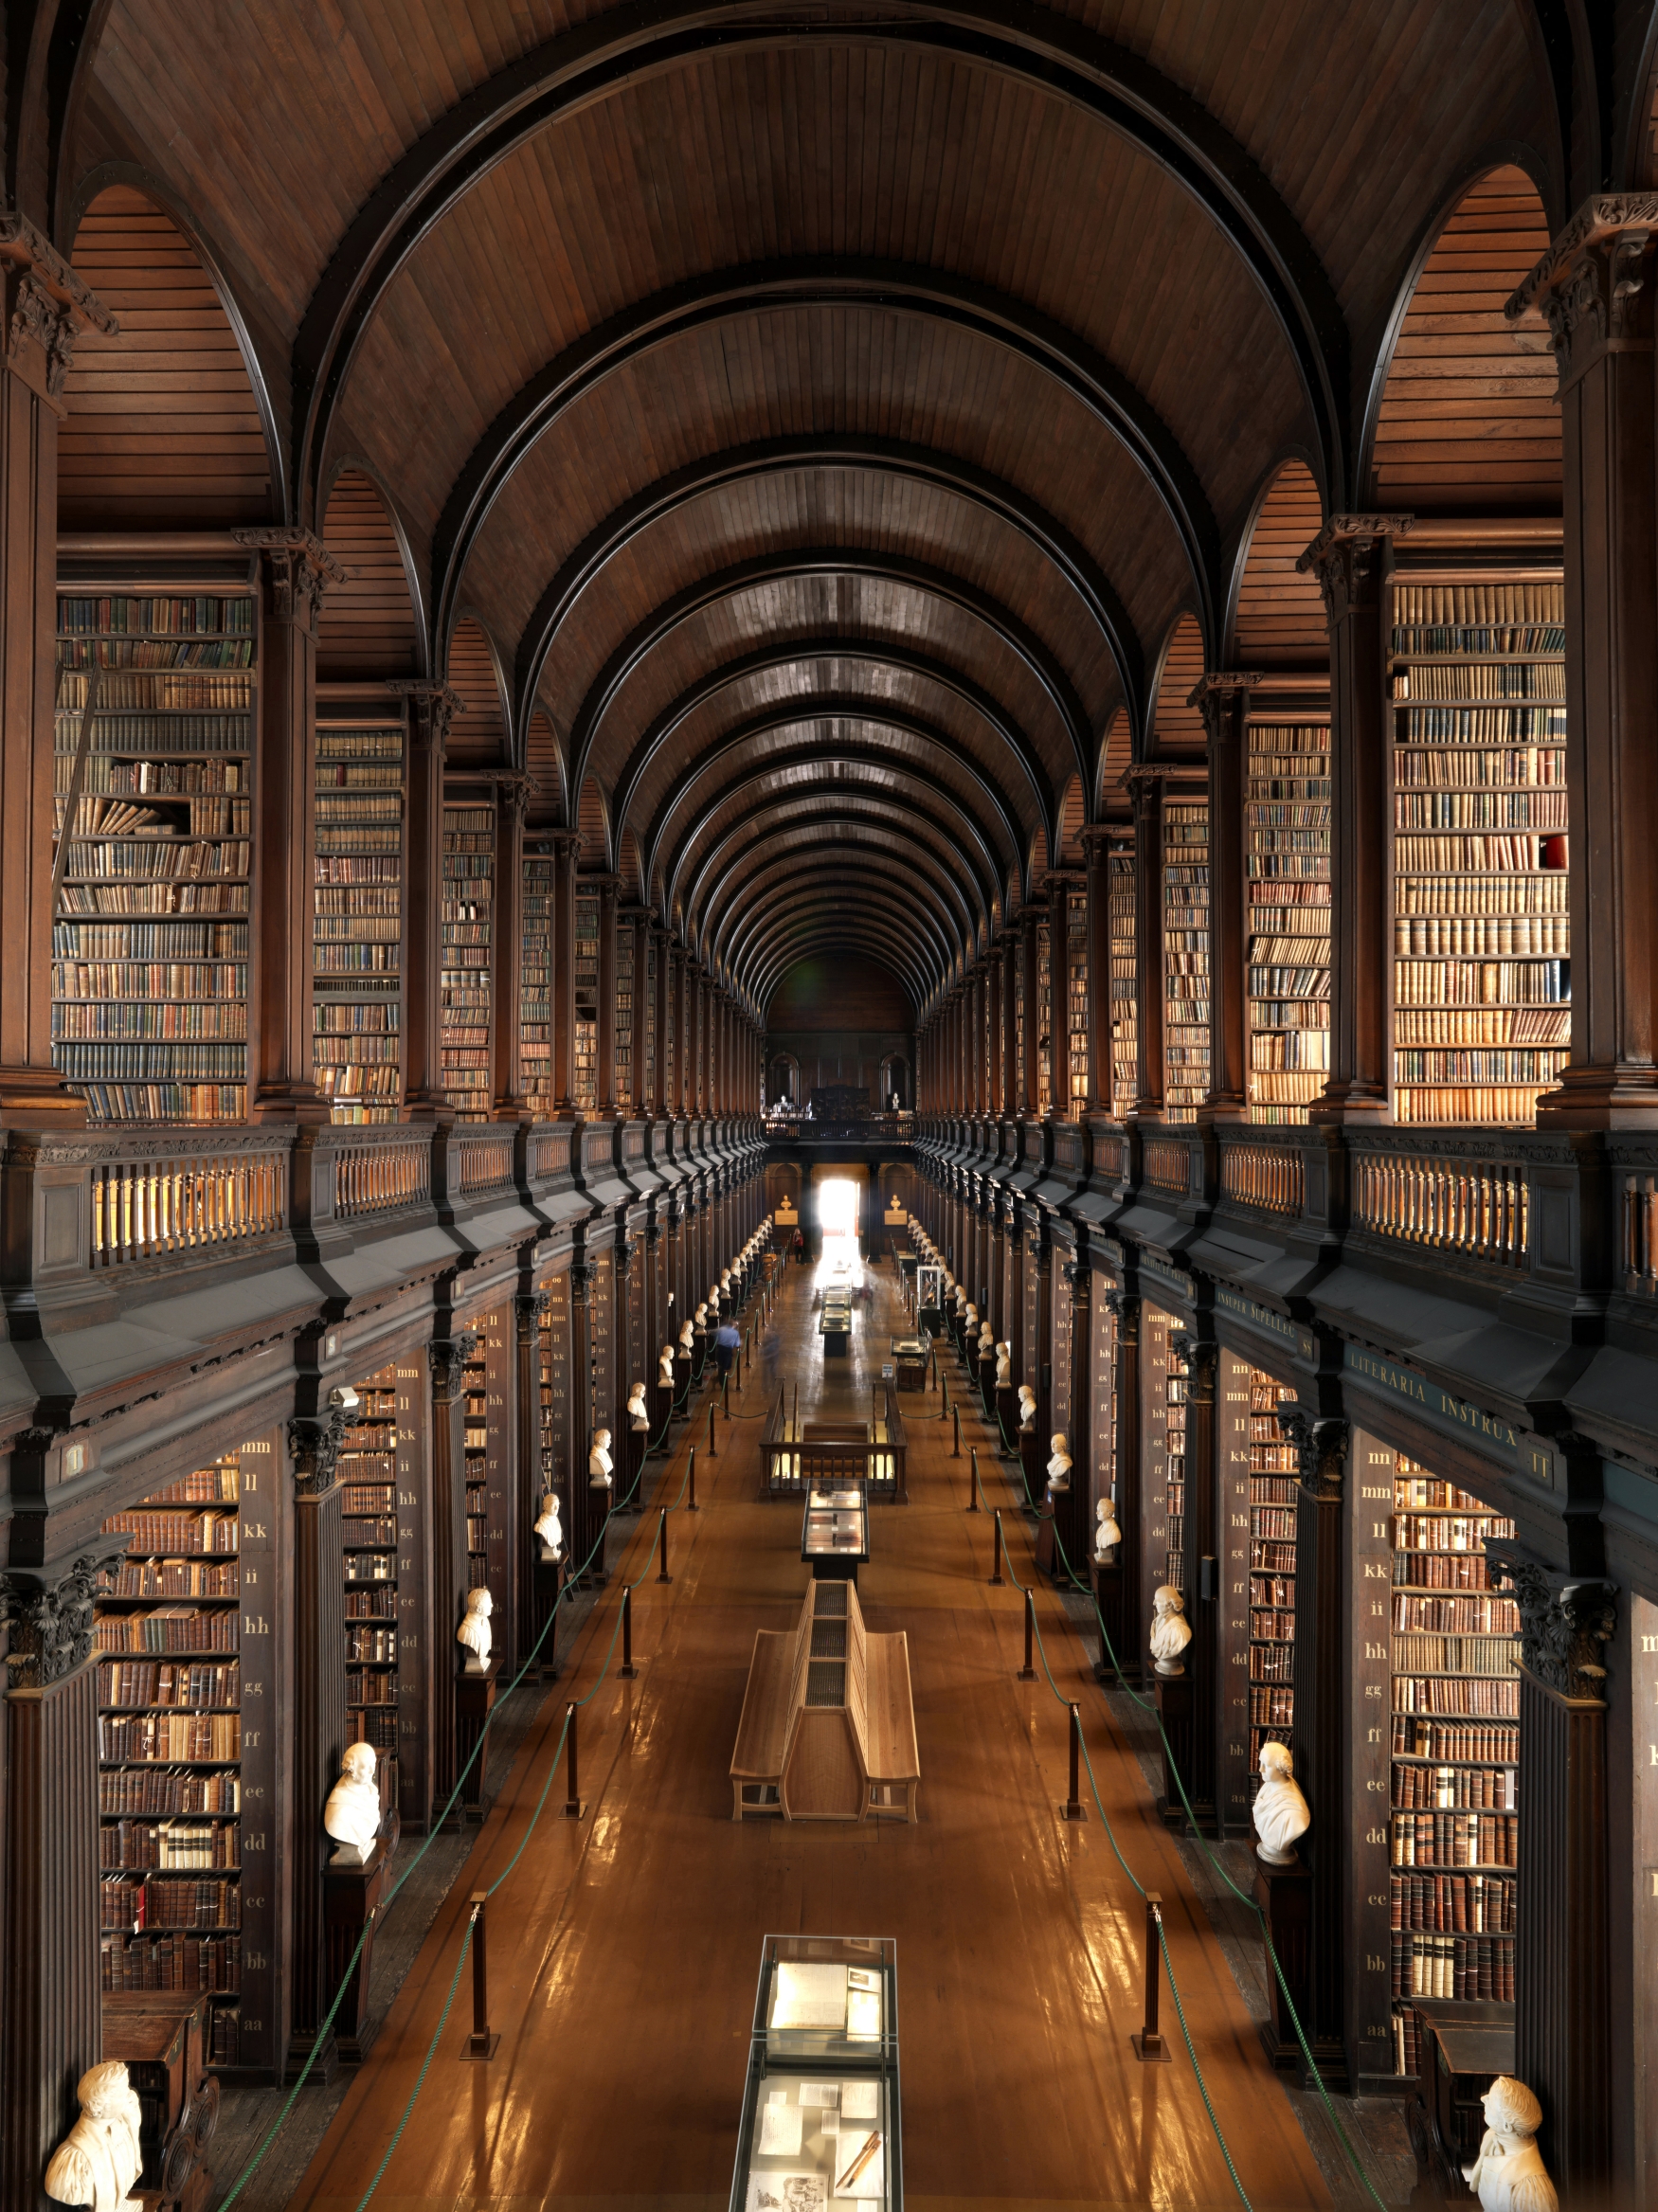 Car library. Тринити колледж Дублин. Библиотека Тринити-колледжа, Дублин, Ирландия. Библиотека Тринити-колледжа в Дублине. Тринити-колледж в Дублине, Ирландия.